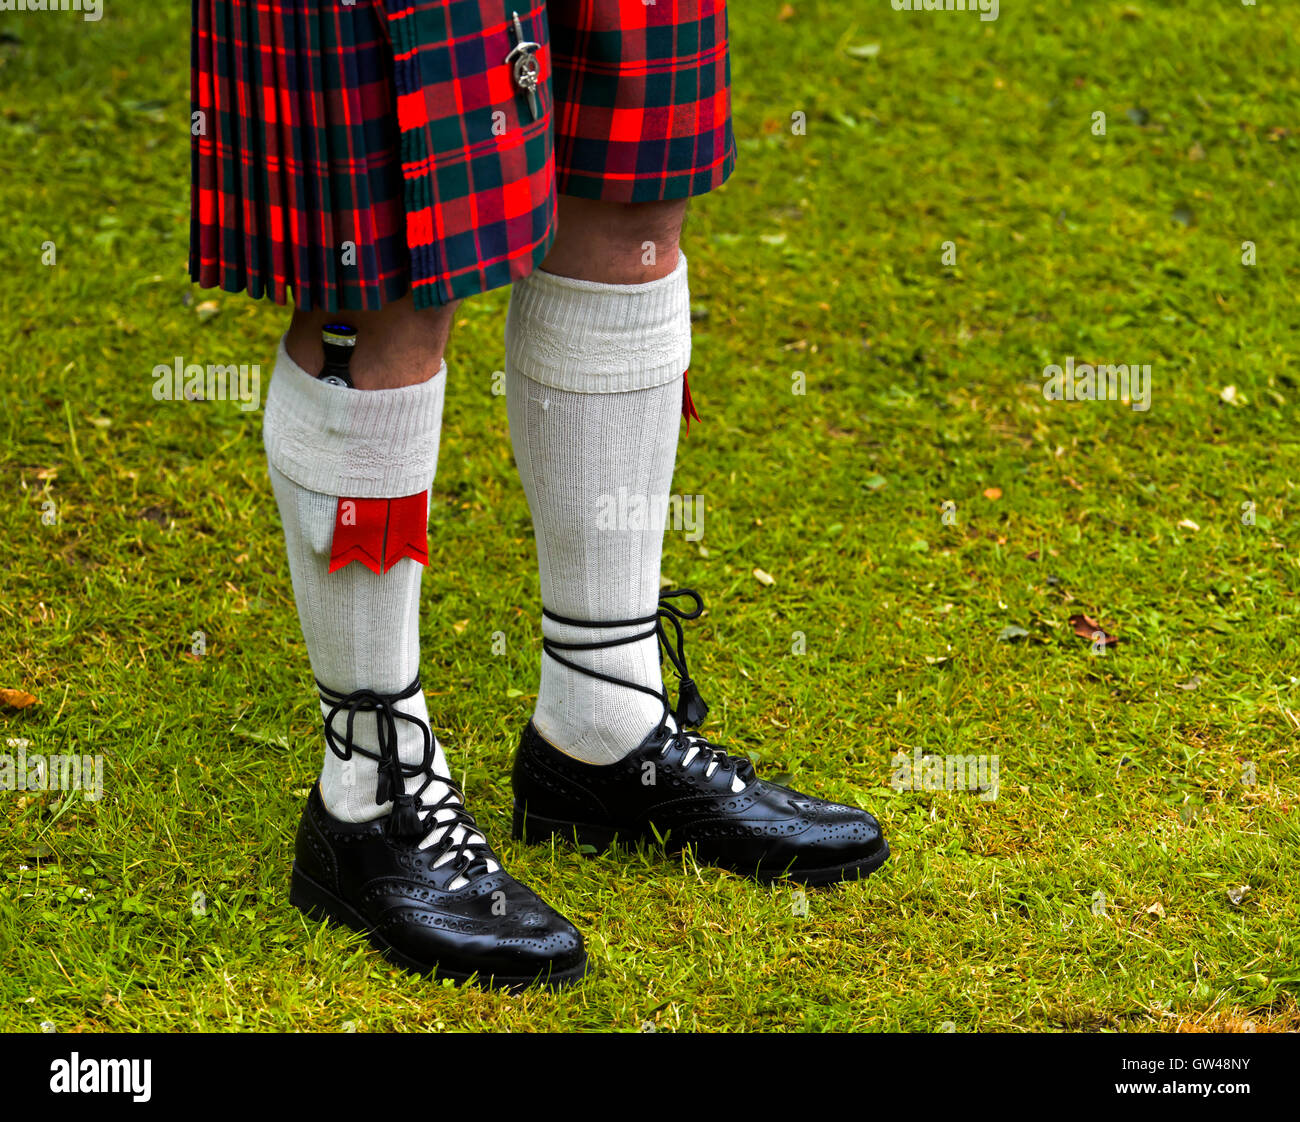 Traditionelle Highland Dress, Kilt, Kilt Socken, Kilt Socken Blitze, Sgian  Dubh Messer und schottischen Leder Ghillie Brogues kilt Schuhe  Stockfotografie - Alamy